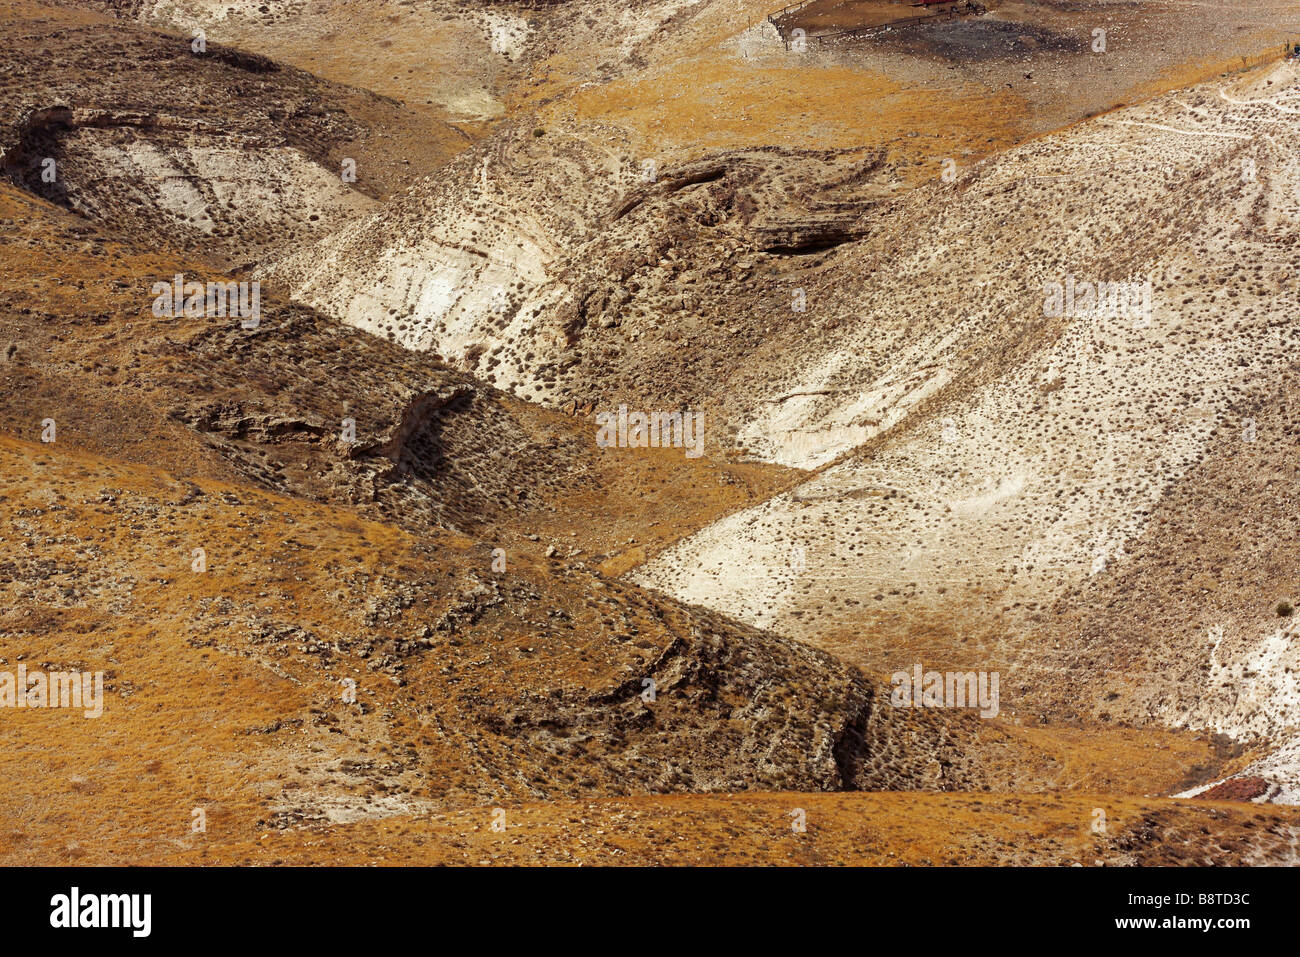 Israel Judea Desert landscape Stock Photo